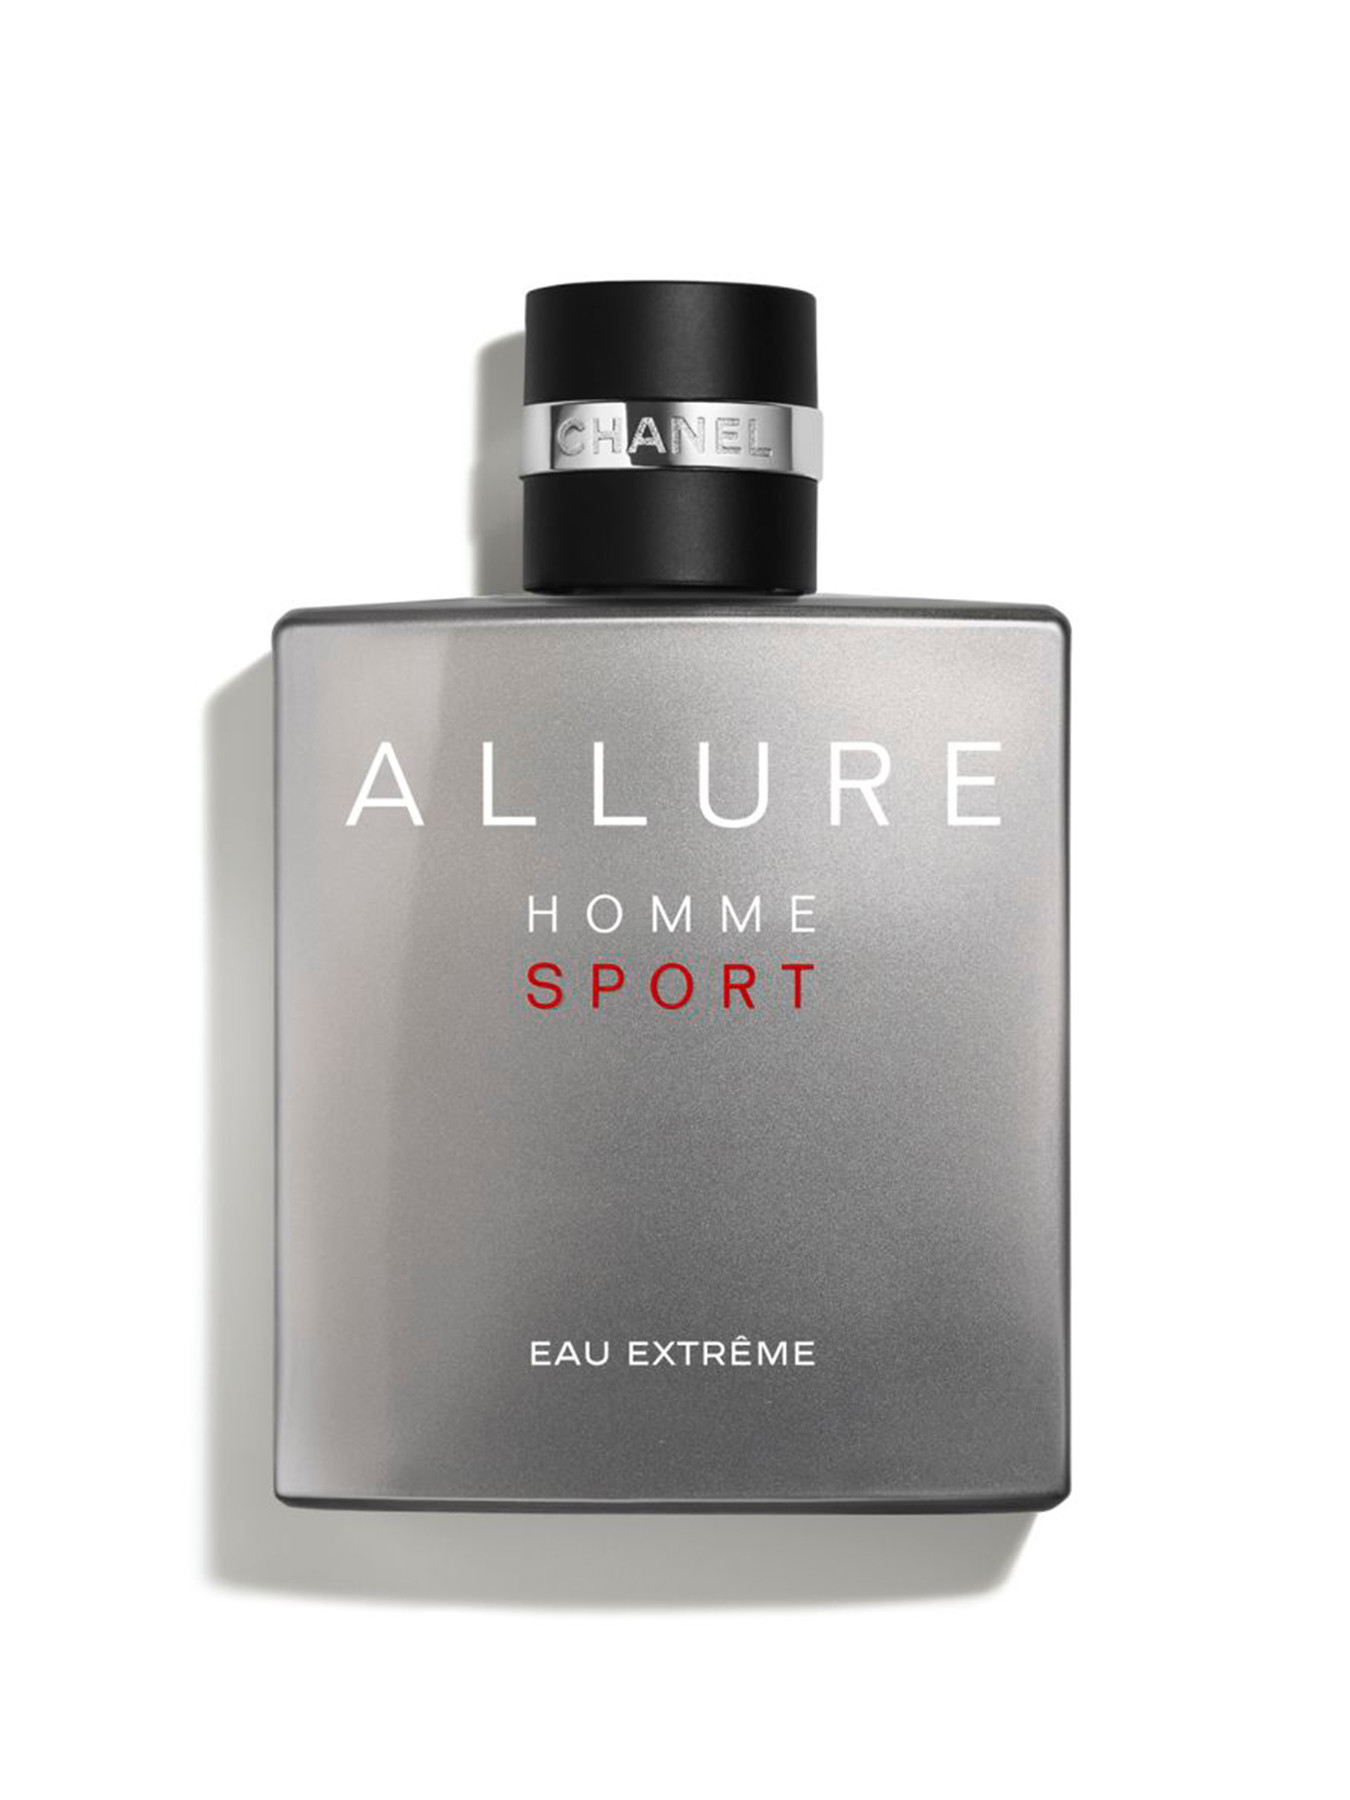 Шанель хоум мужские. Allure homme Sport 100ml. Шанель Аллюр хом спорт. Chanel Allure Sport 100 ml. Allure homme Sport туалетная вода 100 мл.